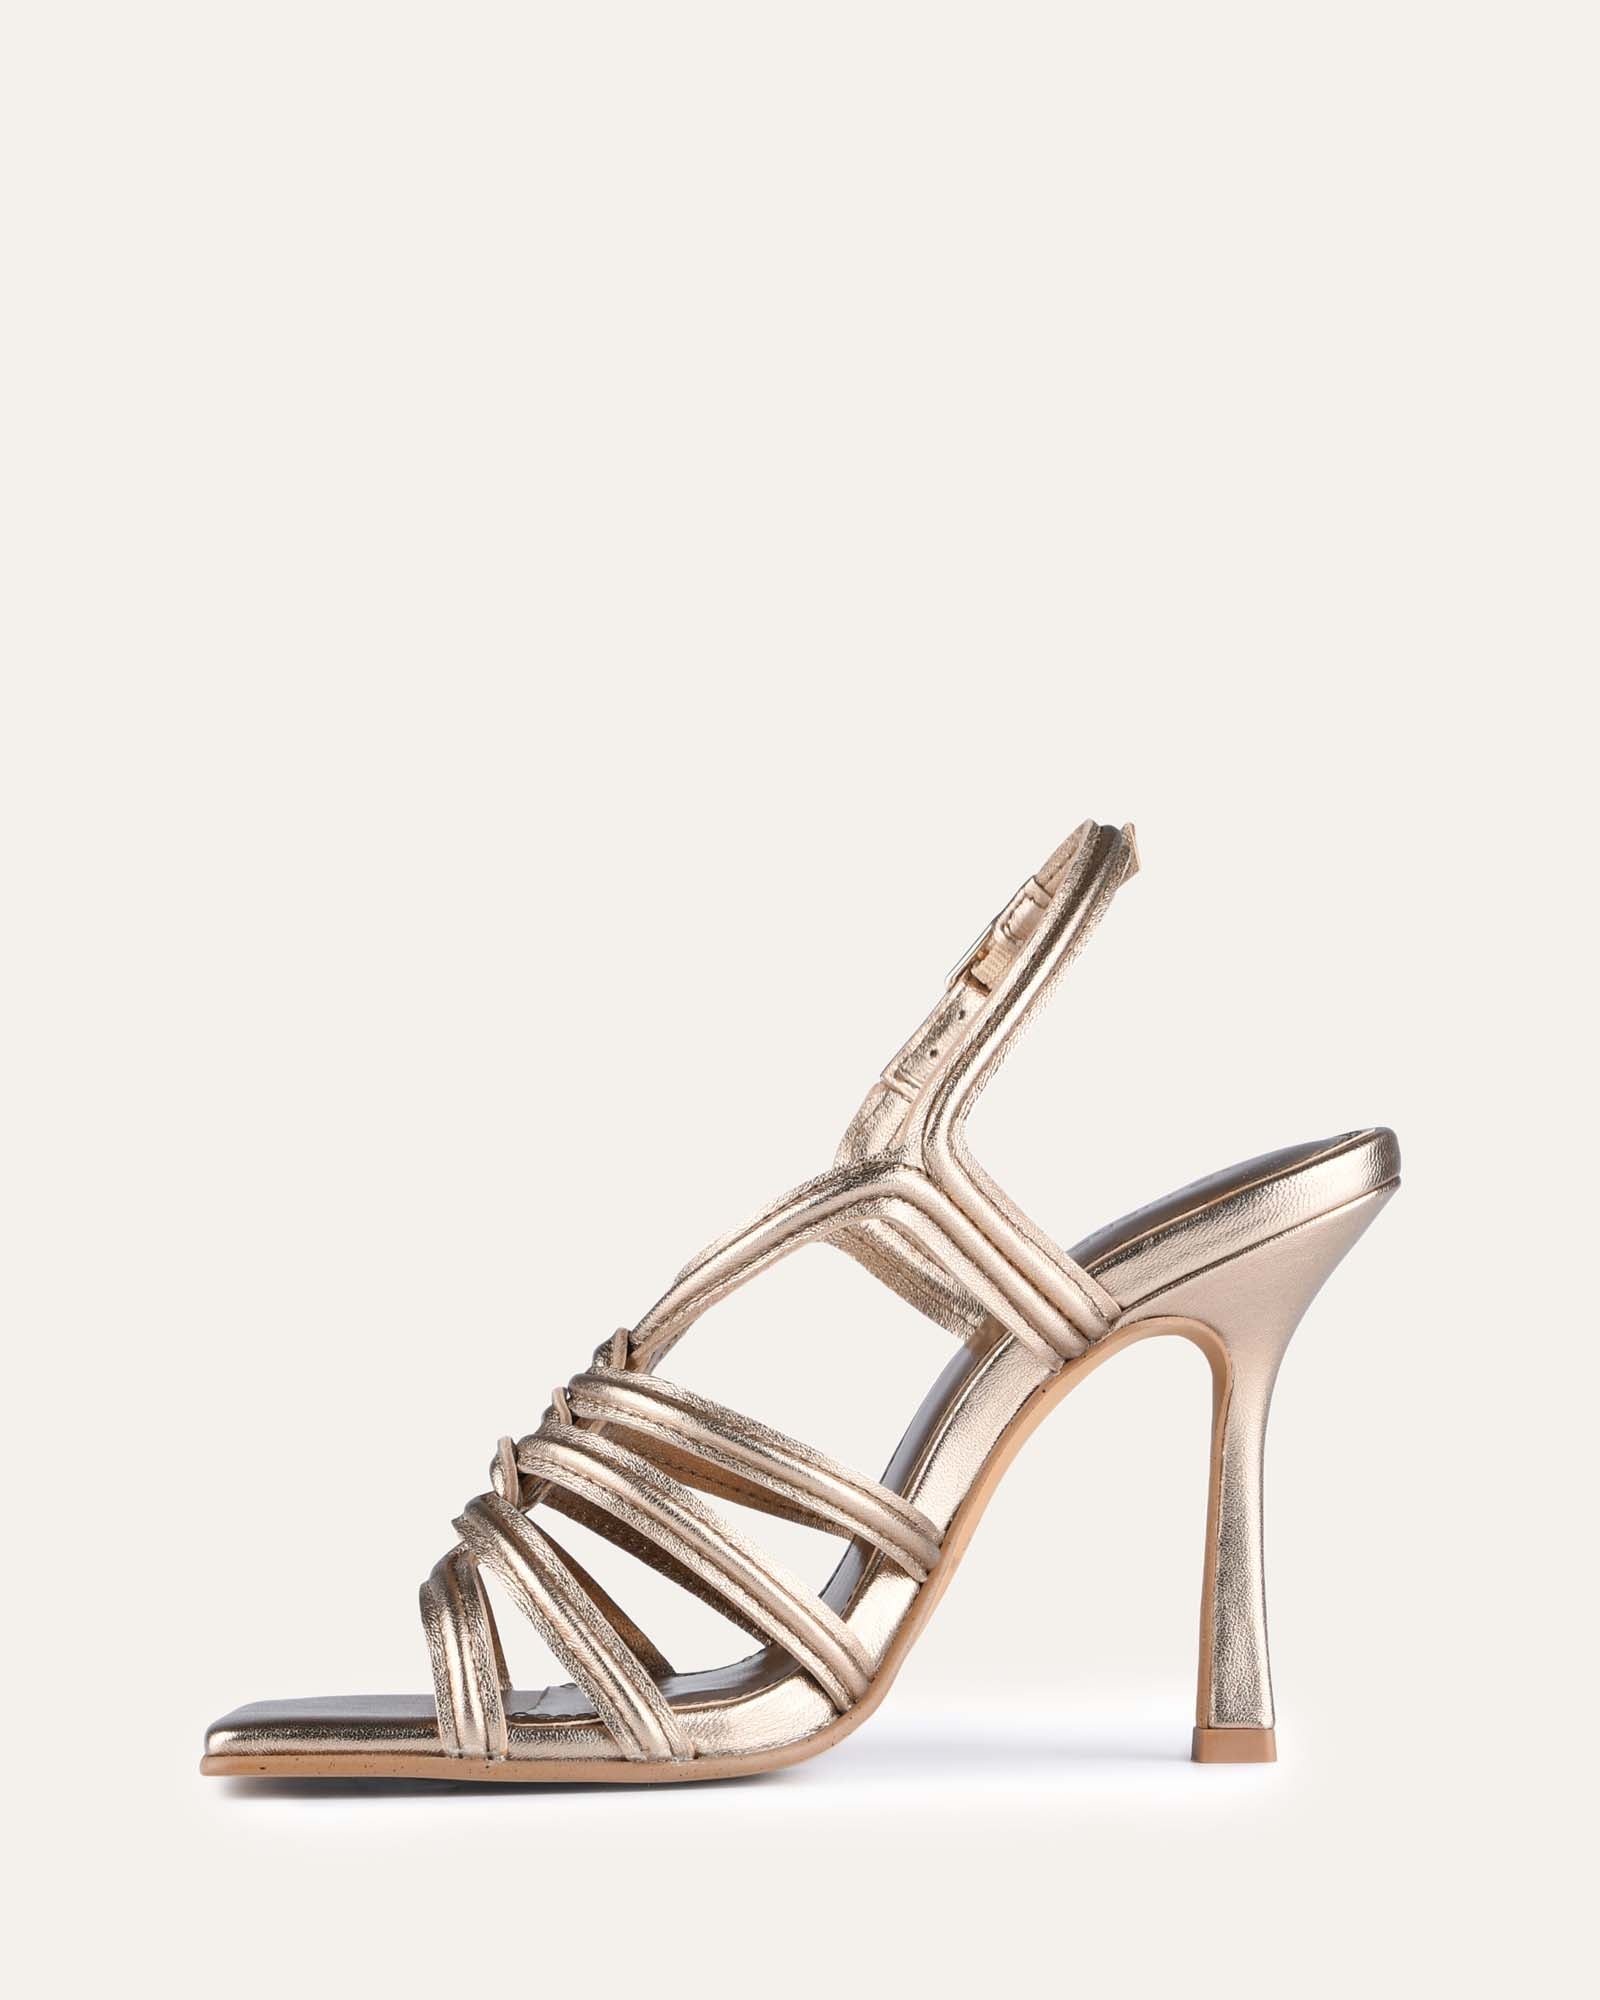 Apulia Flared Heels in Gold Metallic | Hannahs